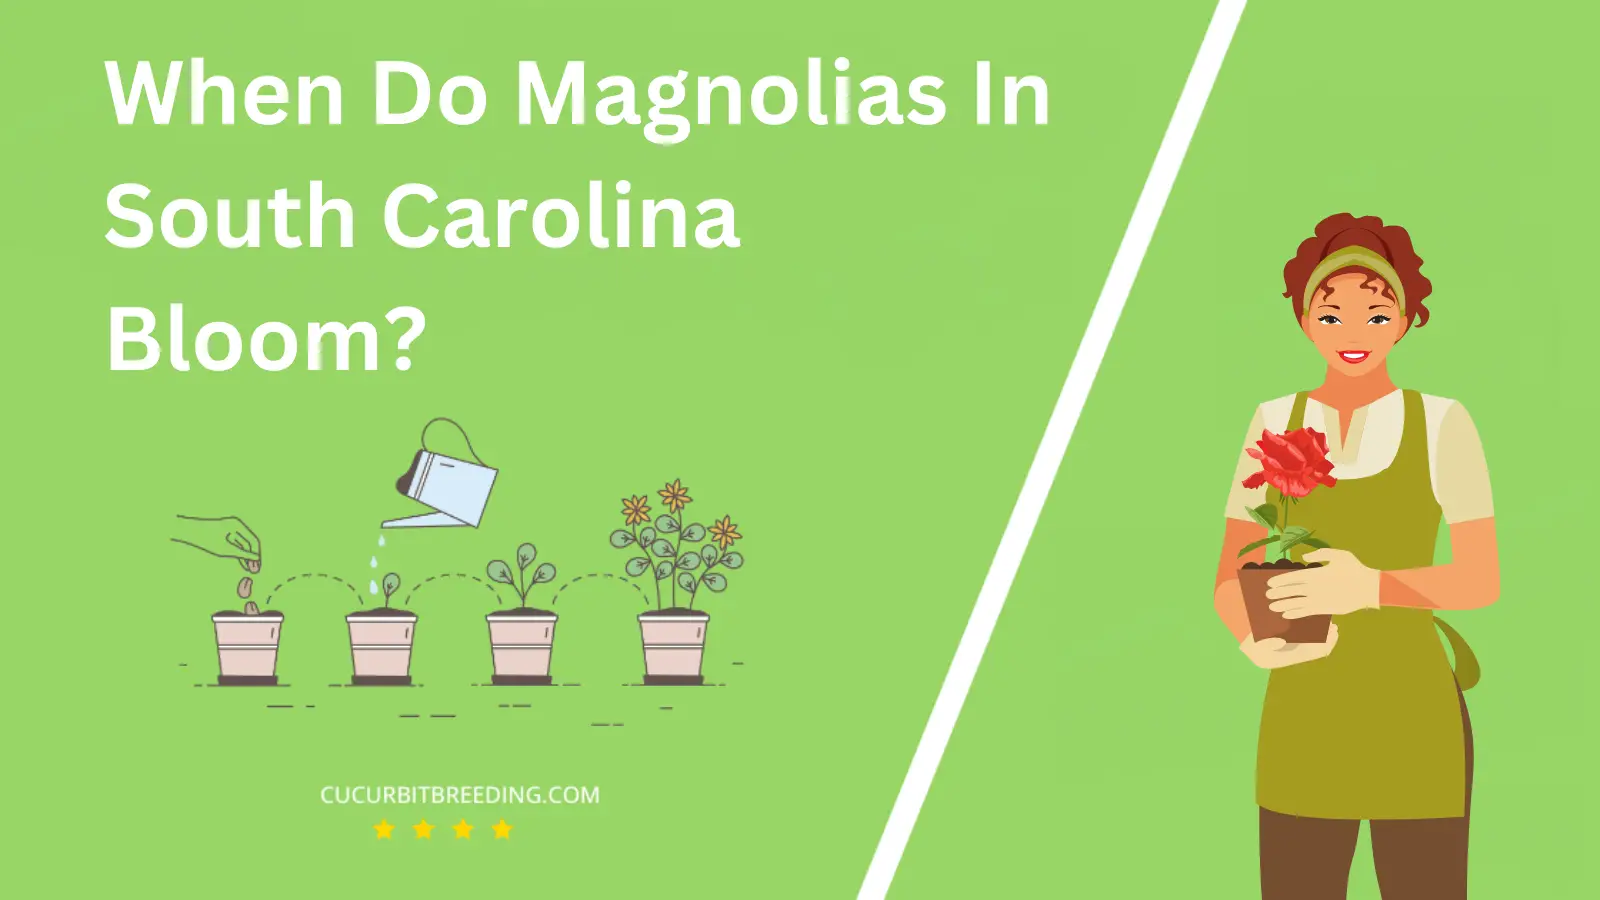 When Do Magnolias In South Carolina Bloom?